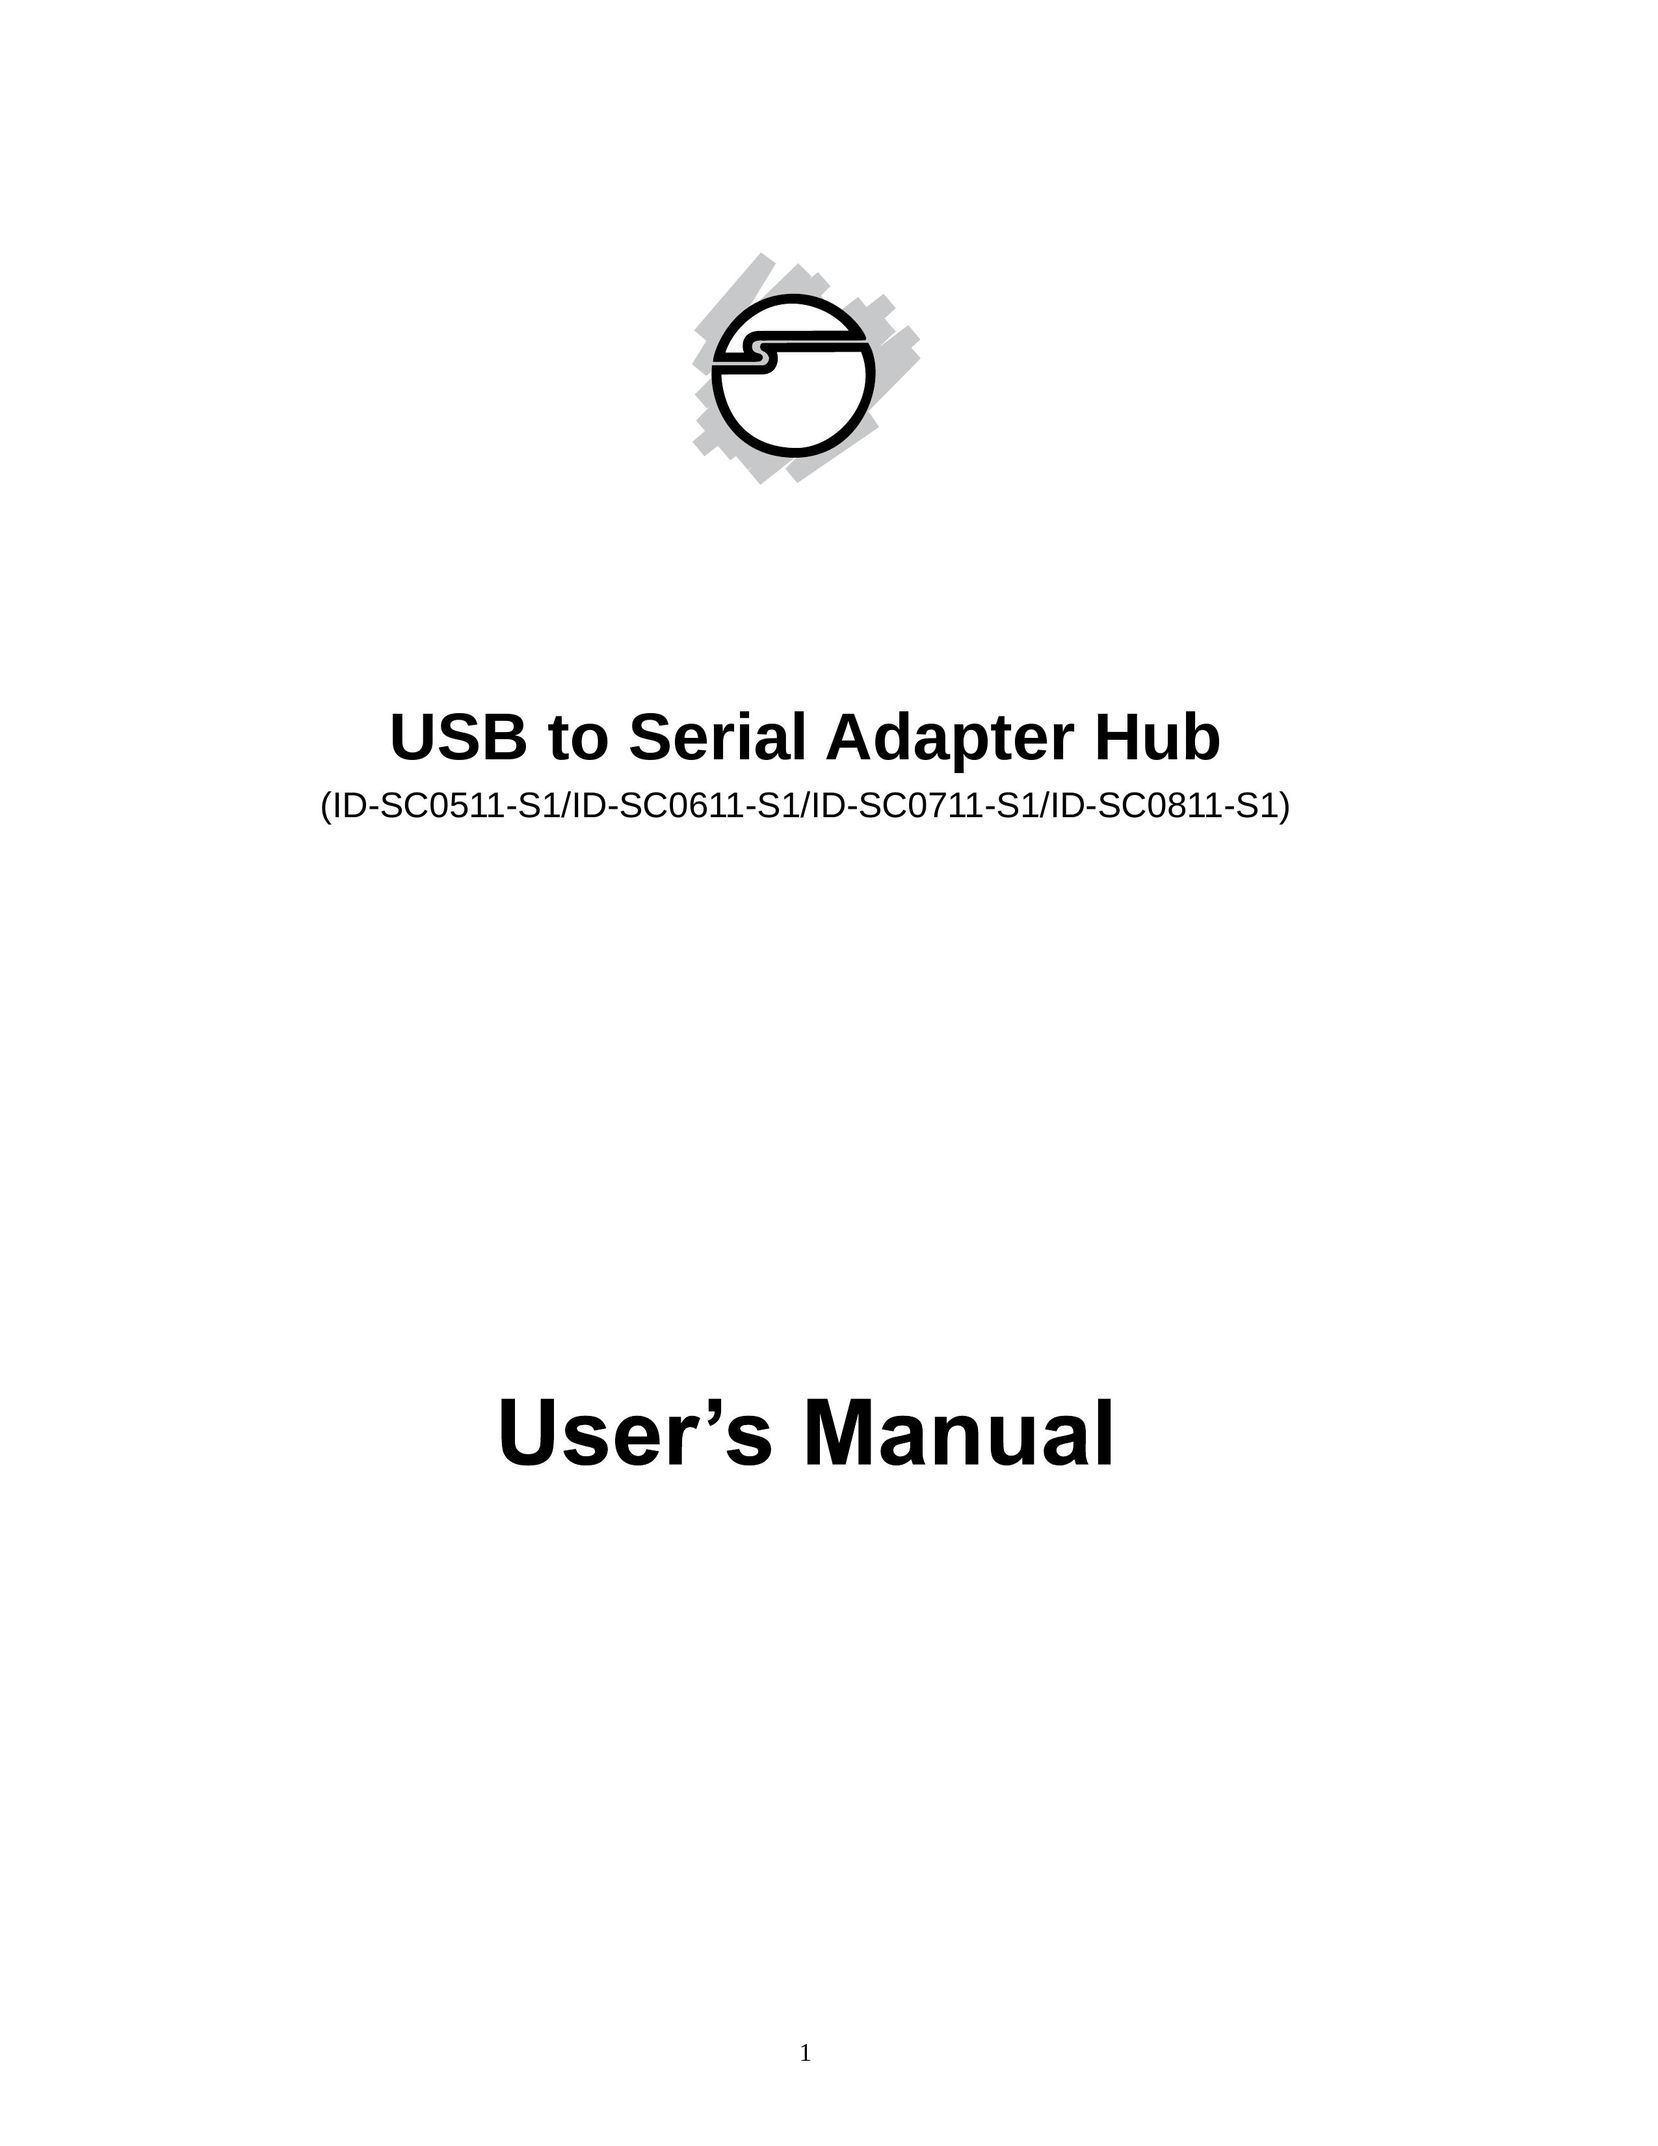 SIIG ID-SC0811-S1 Computer Drive User Manual